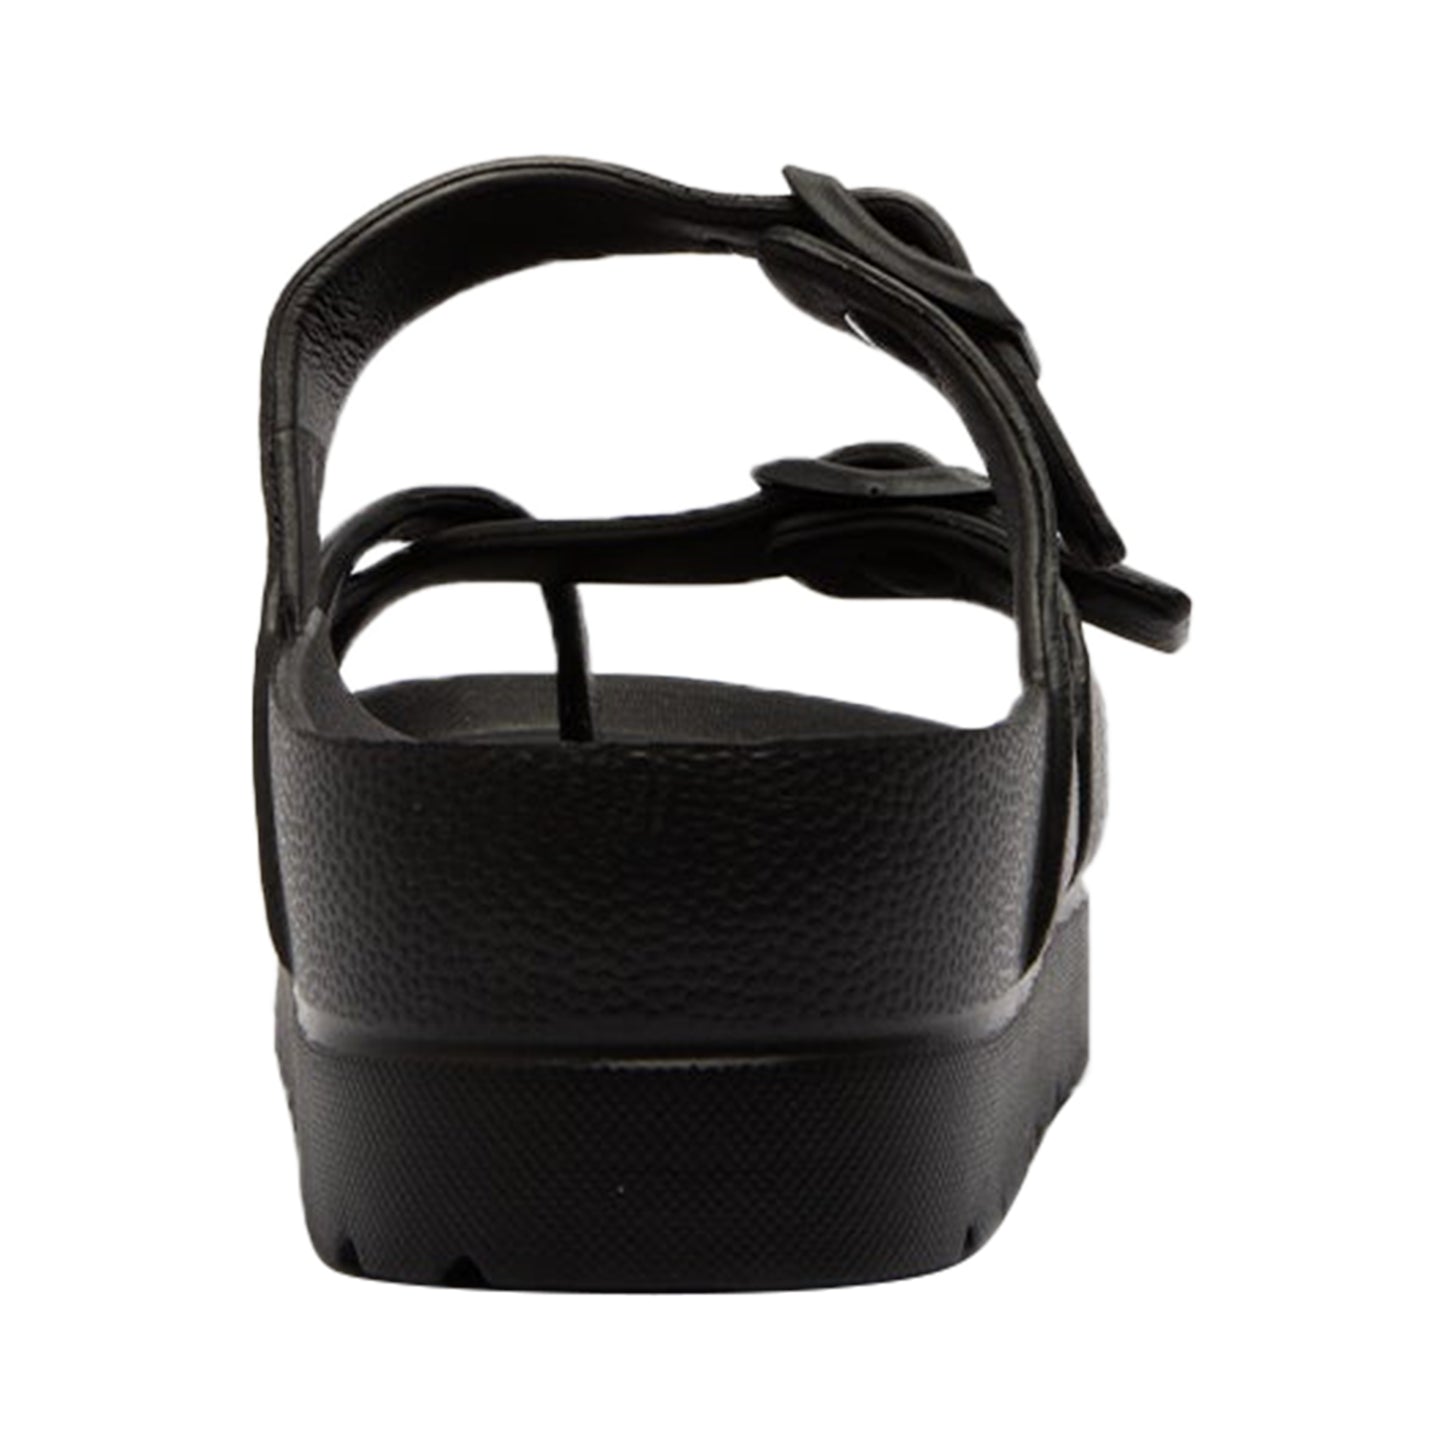 SOBEYO Women's Strappy Platform Sandals Ring Toe Double Buckles Black